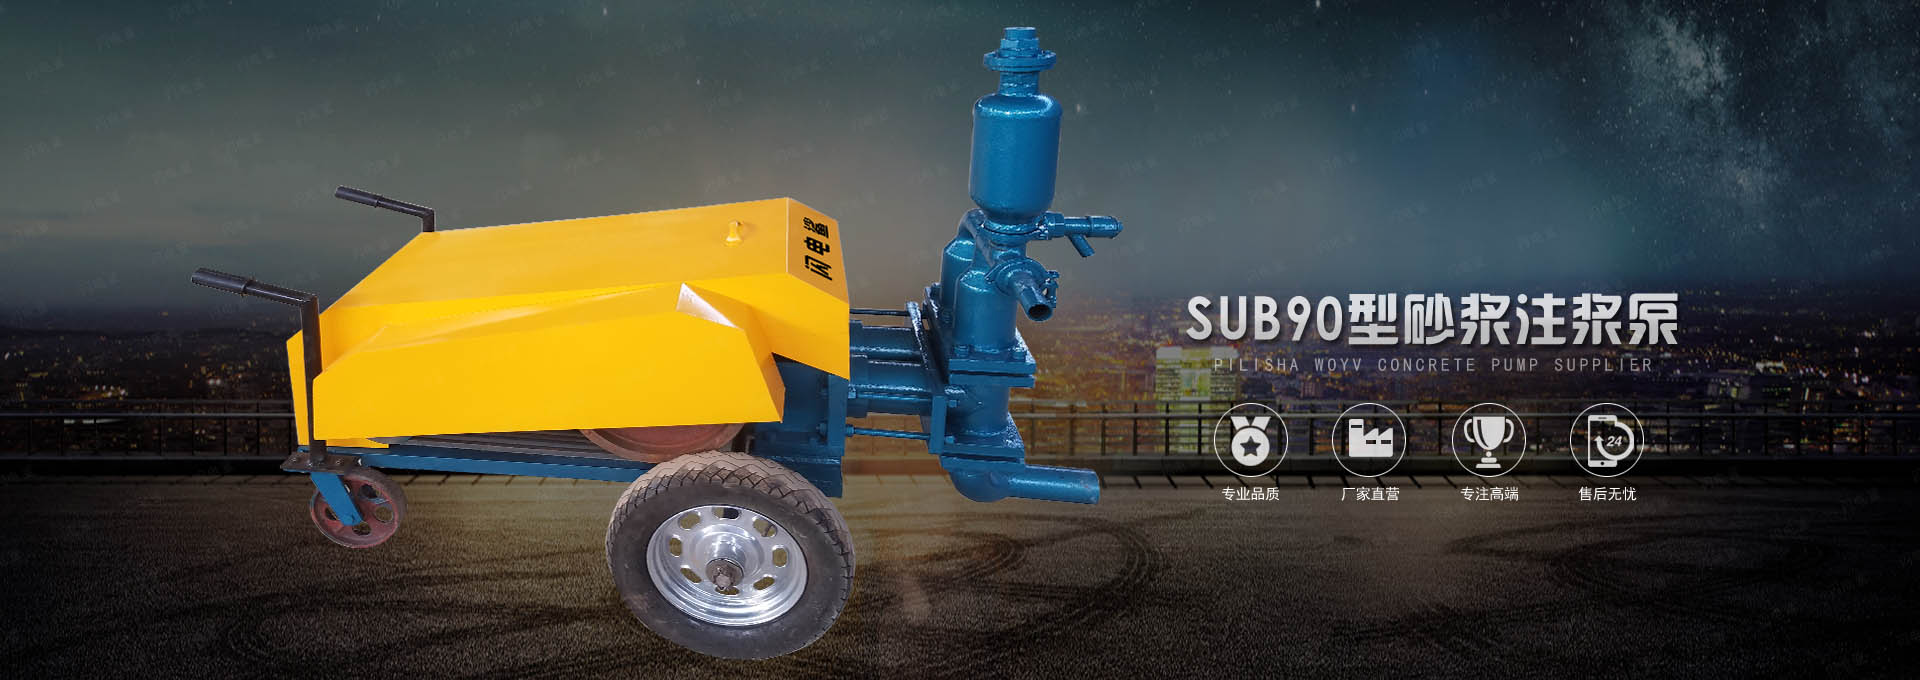 SUB90型砂浆输送泵